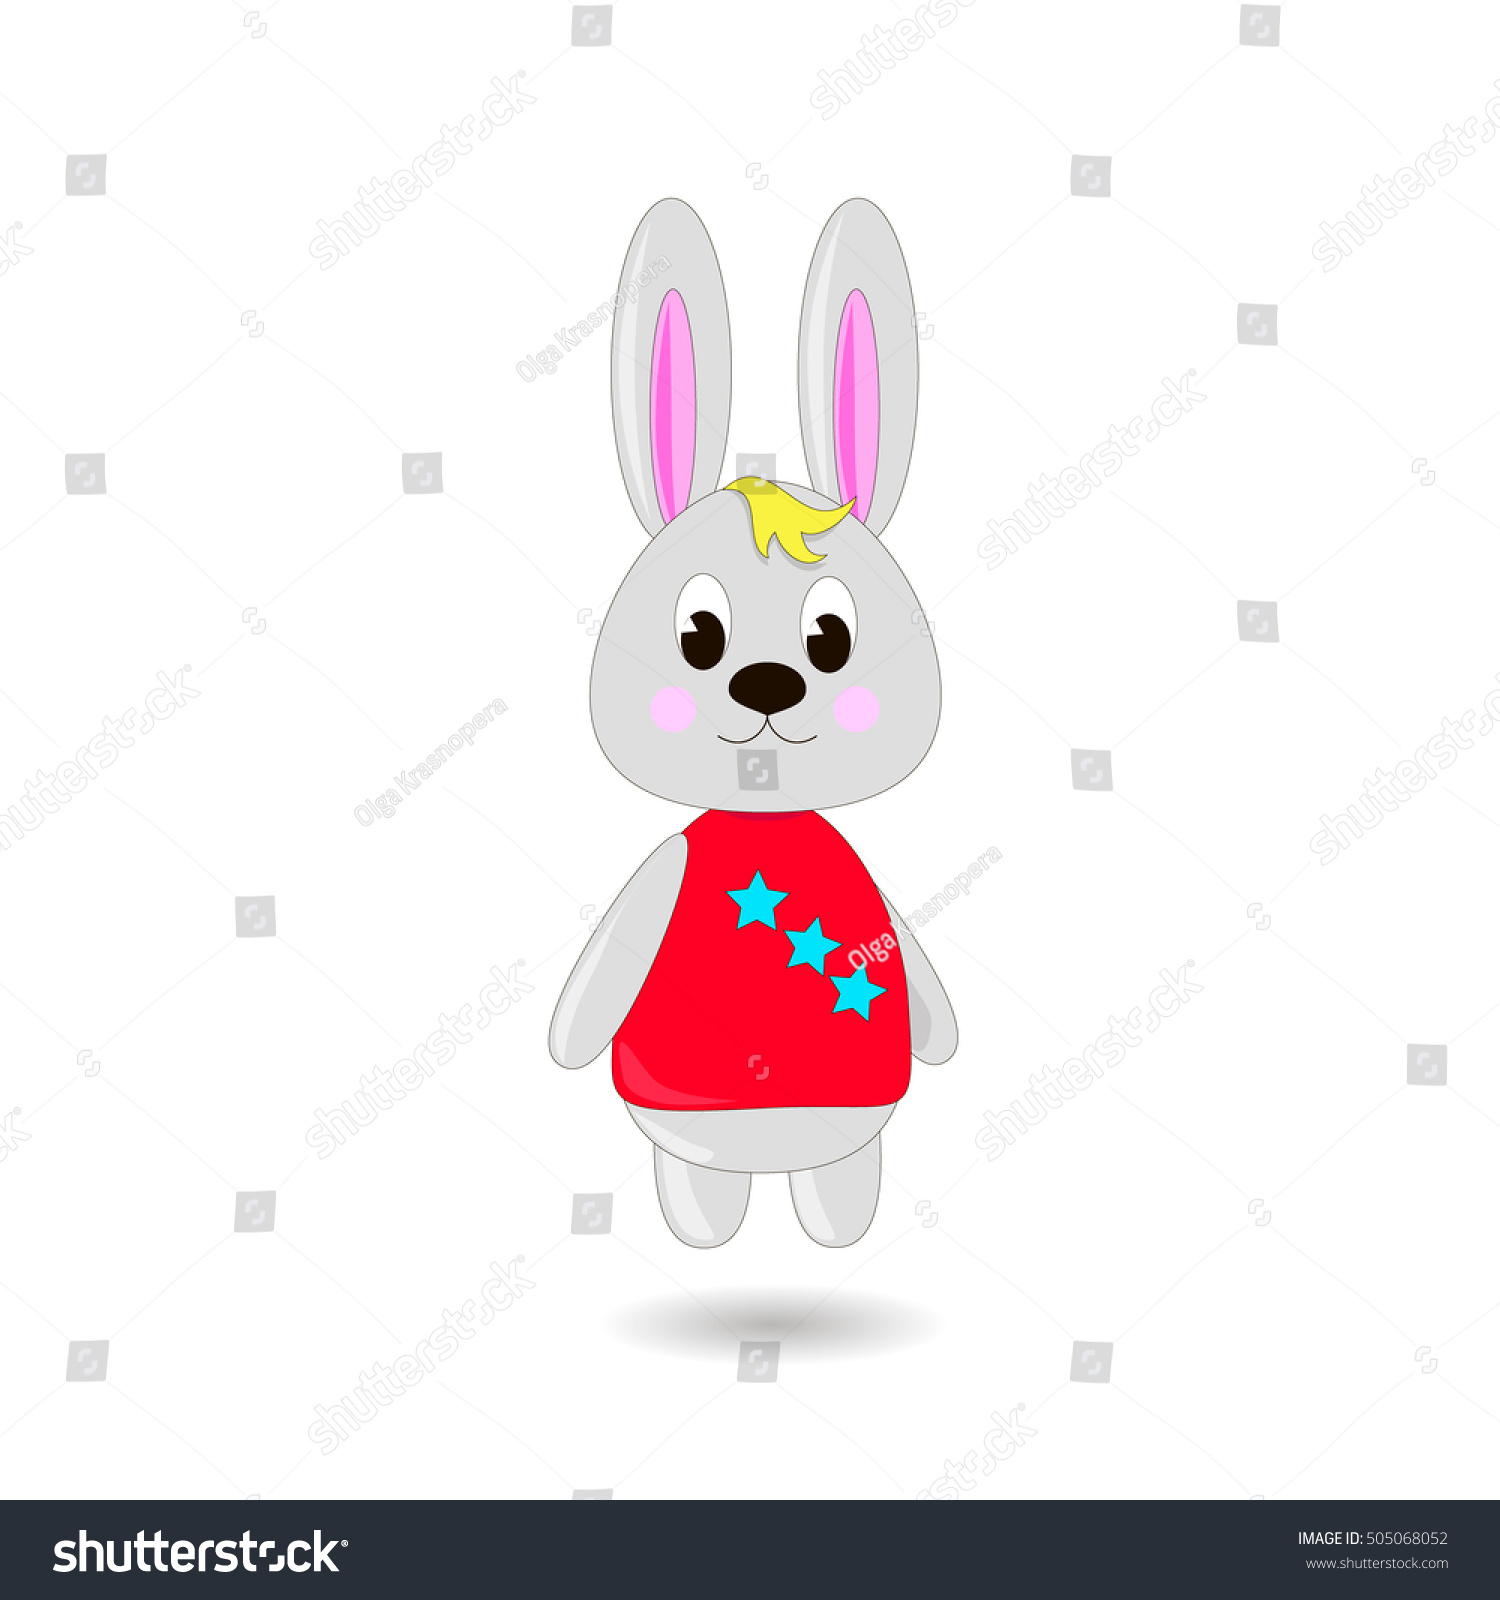 Wallpaper Of Cartoon Rabbit